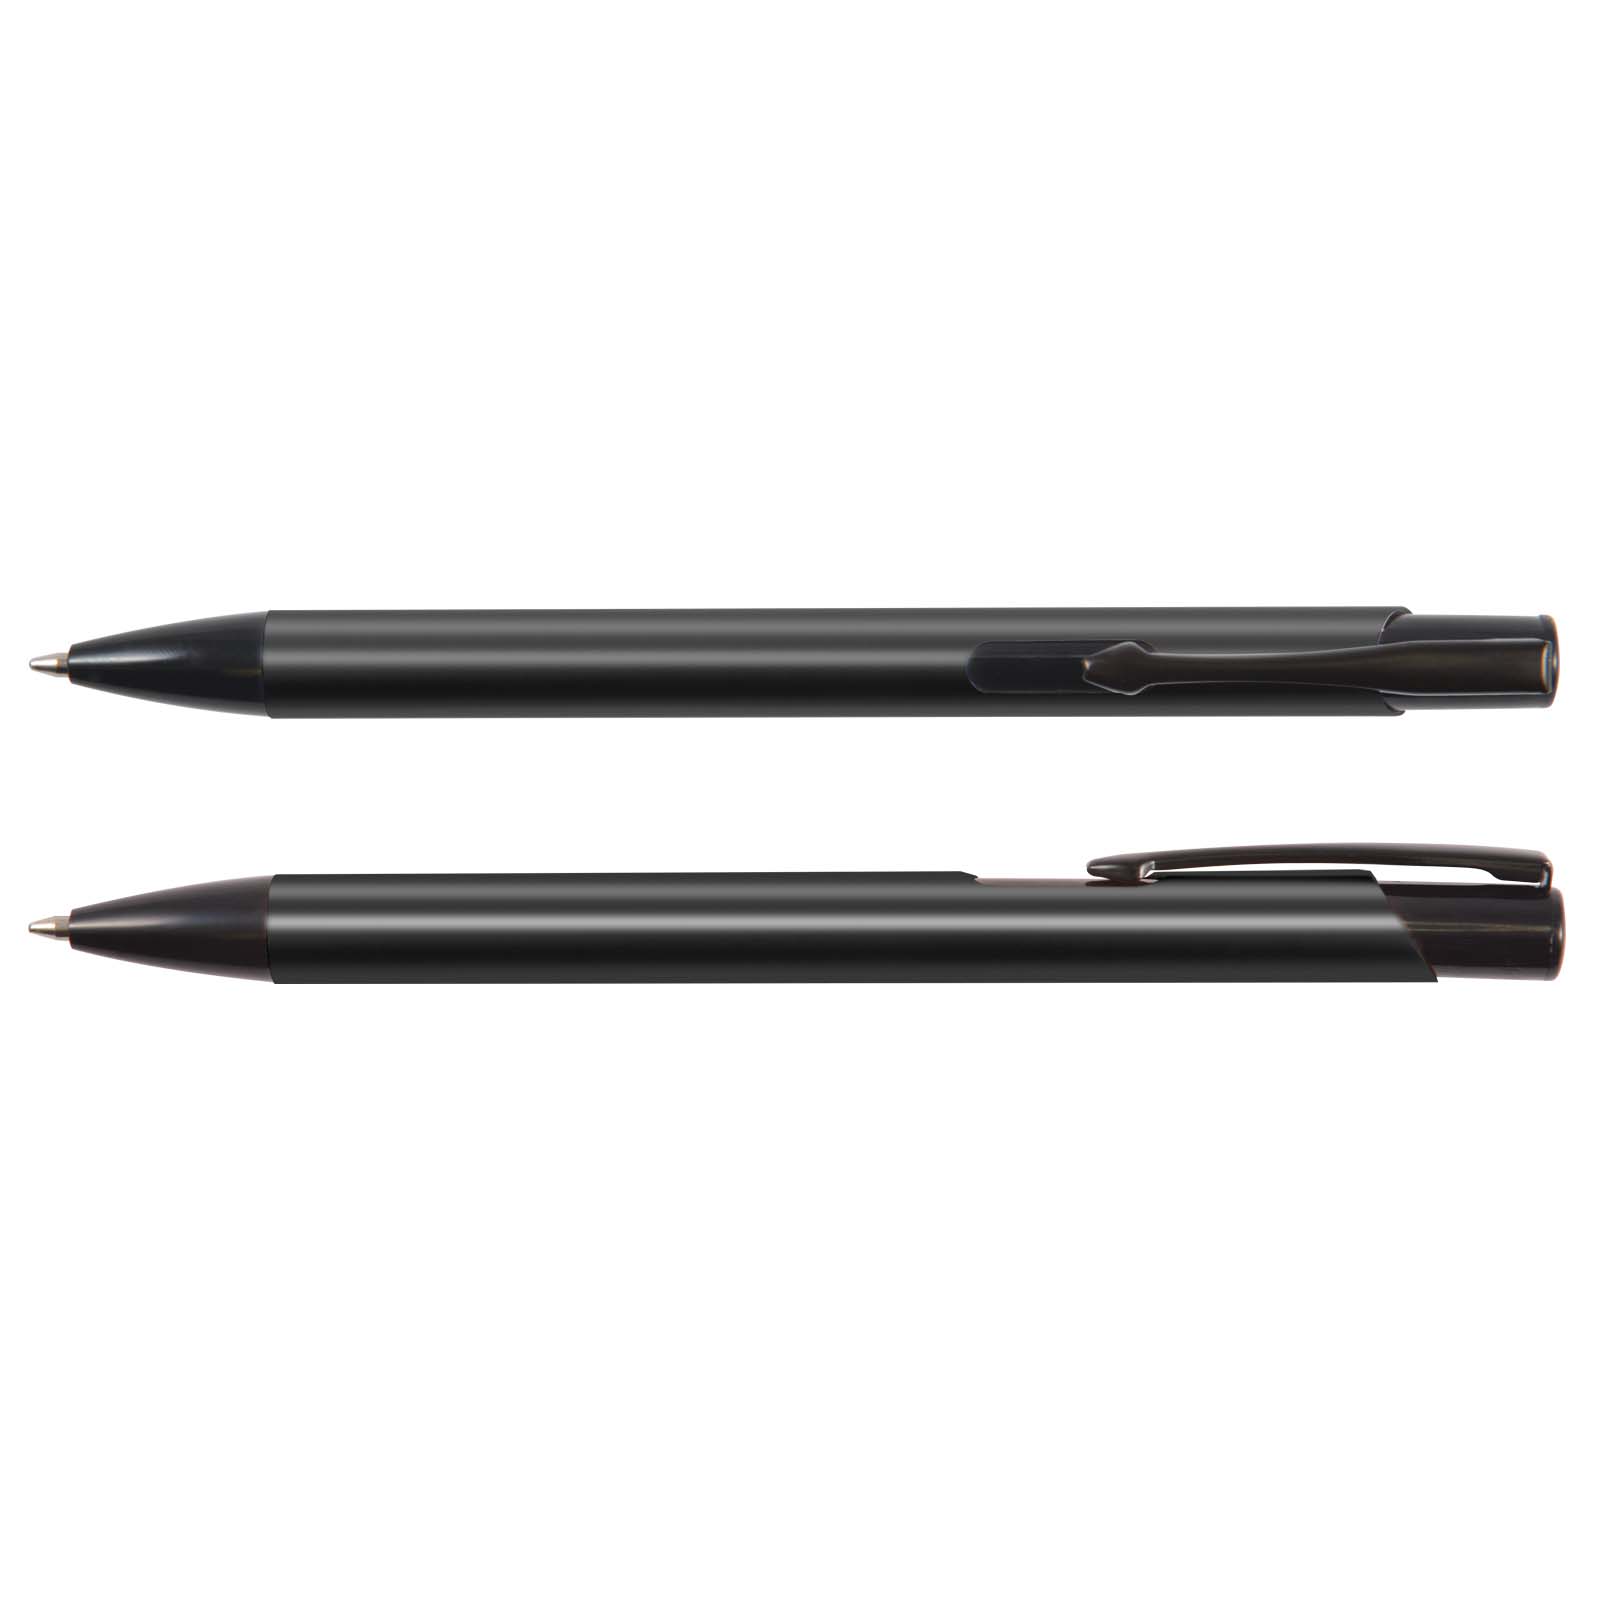 LL4 Napier Pen (Black Edition) (Black